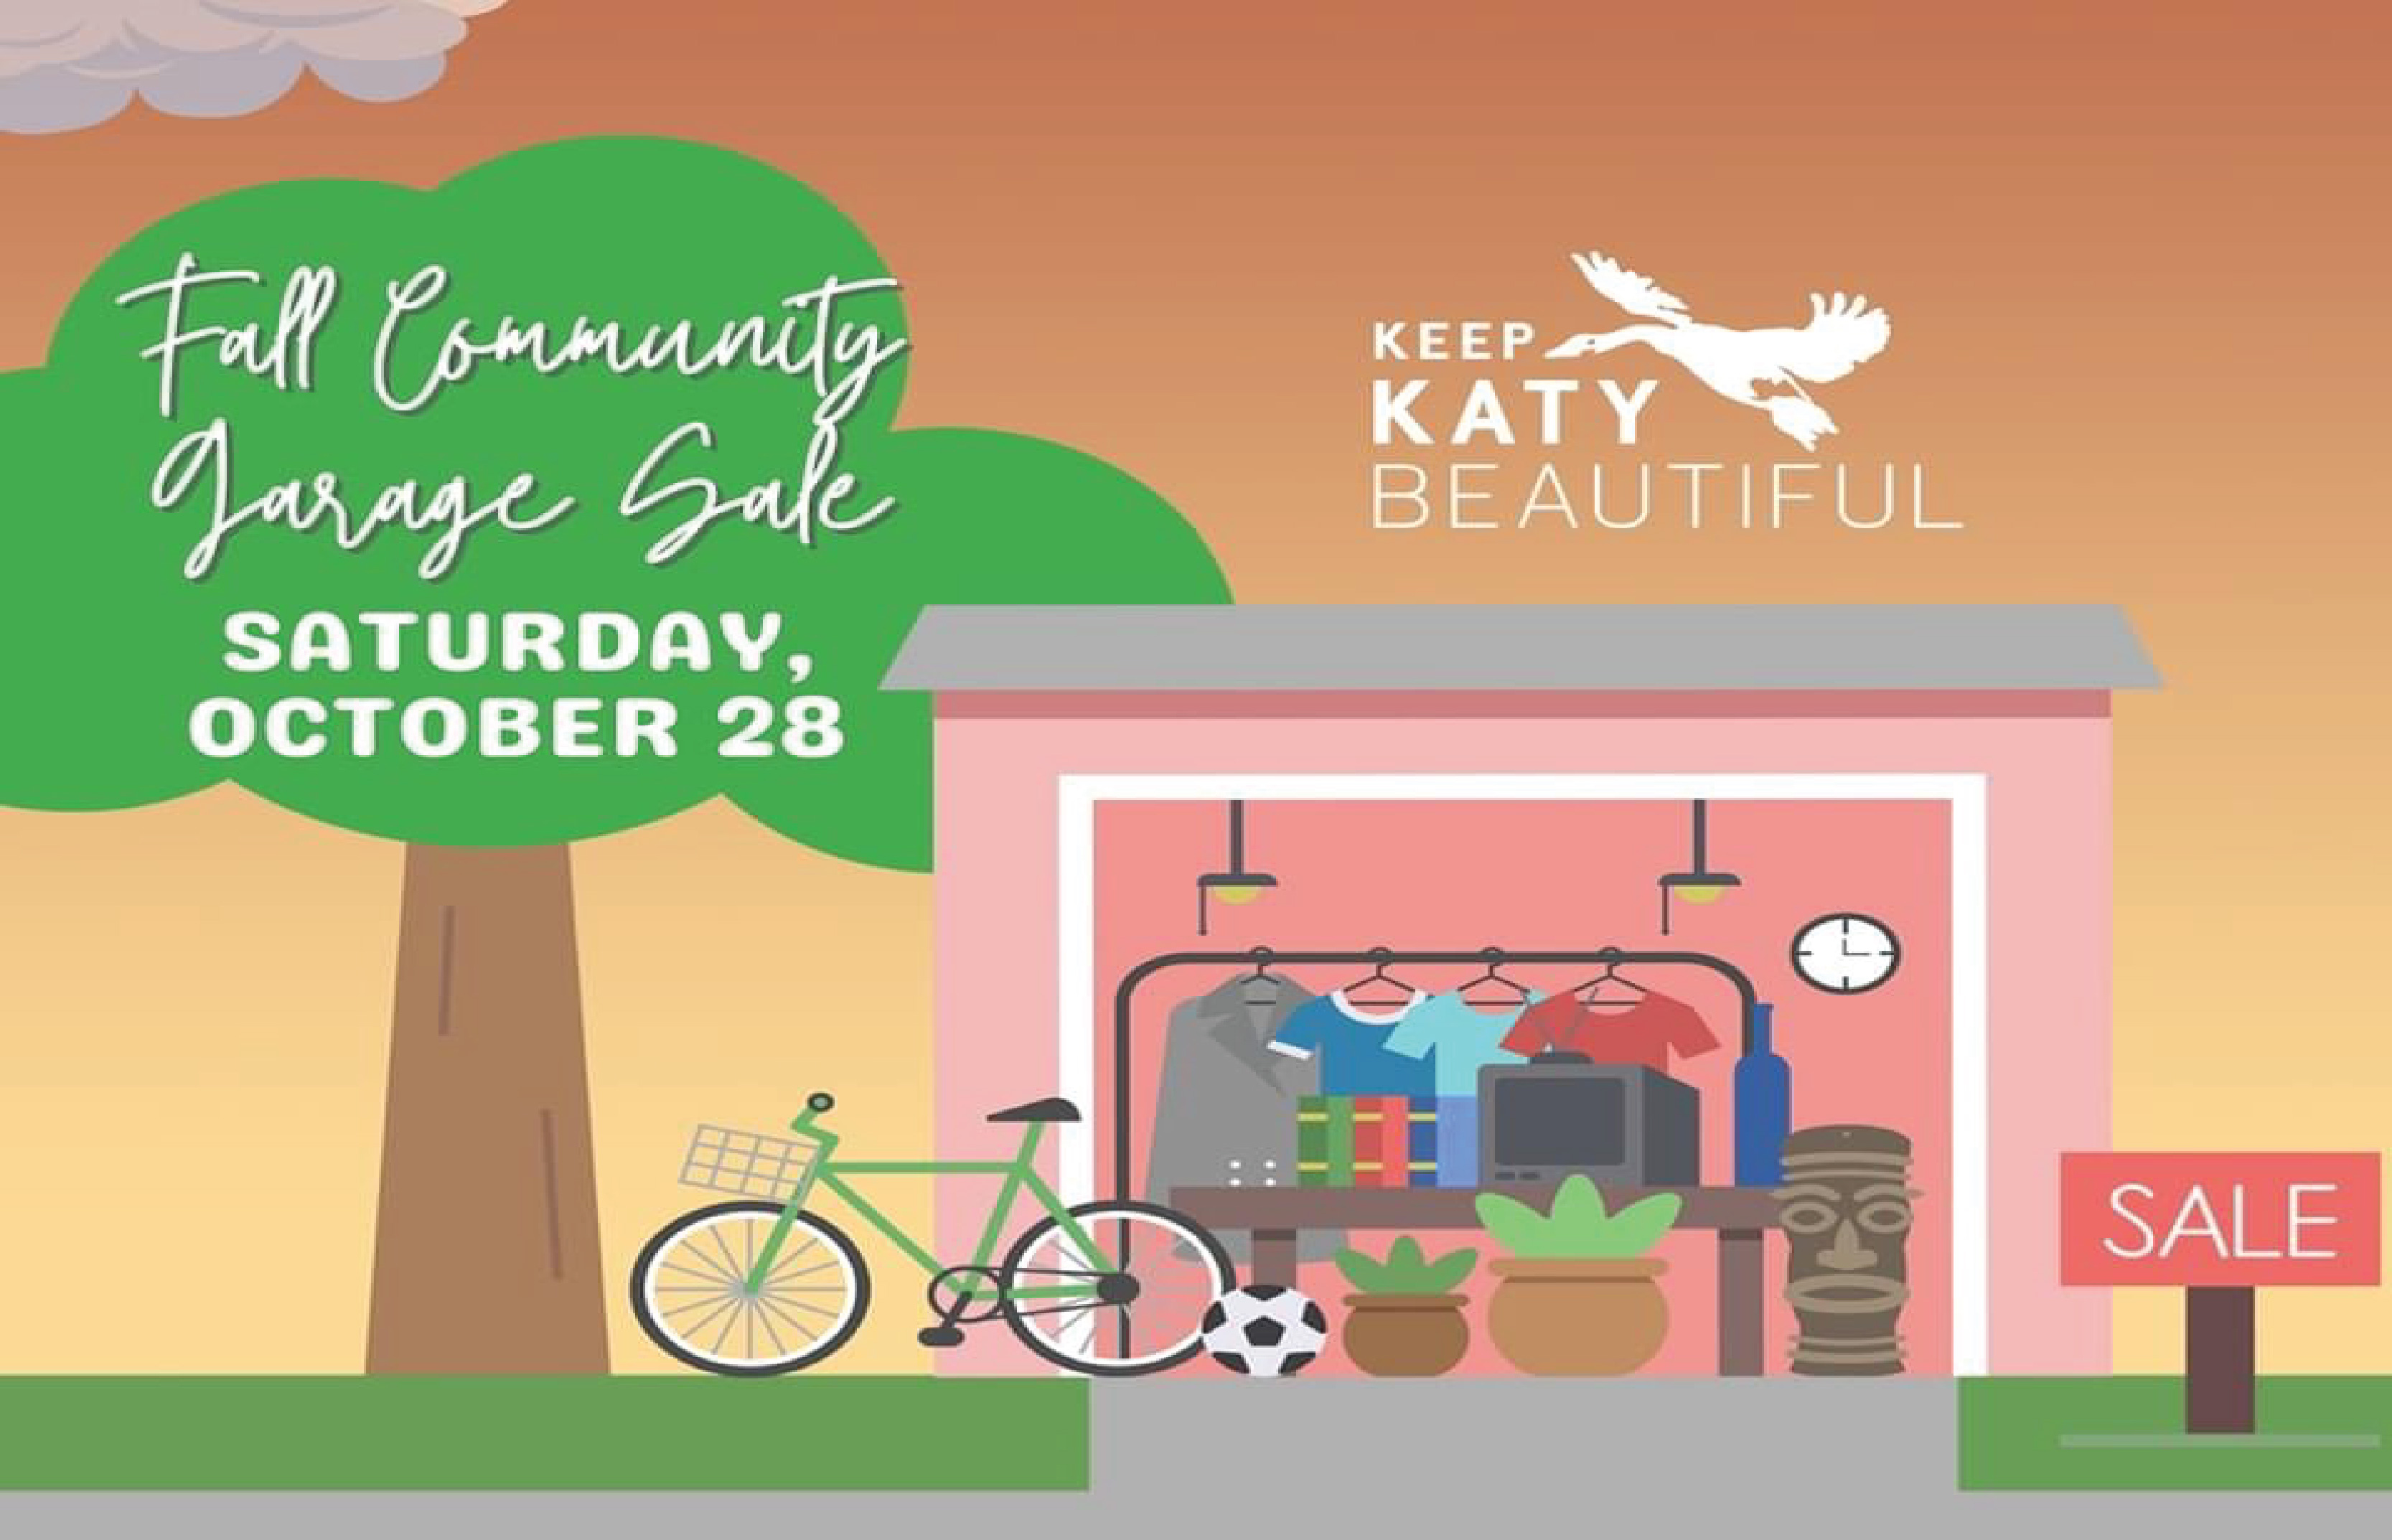 Bargain Hunters Rejoice: City of Katy's Fall Community Garage Sale Participants List Released